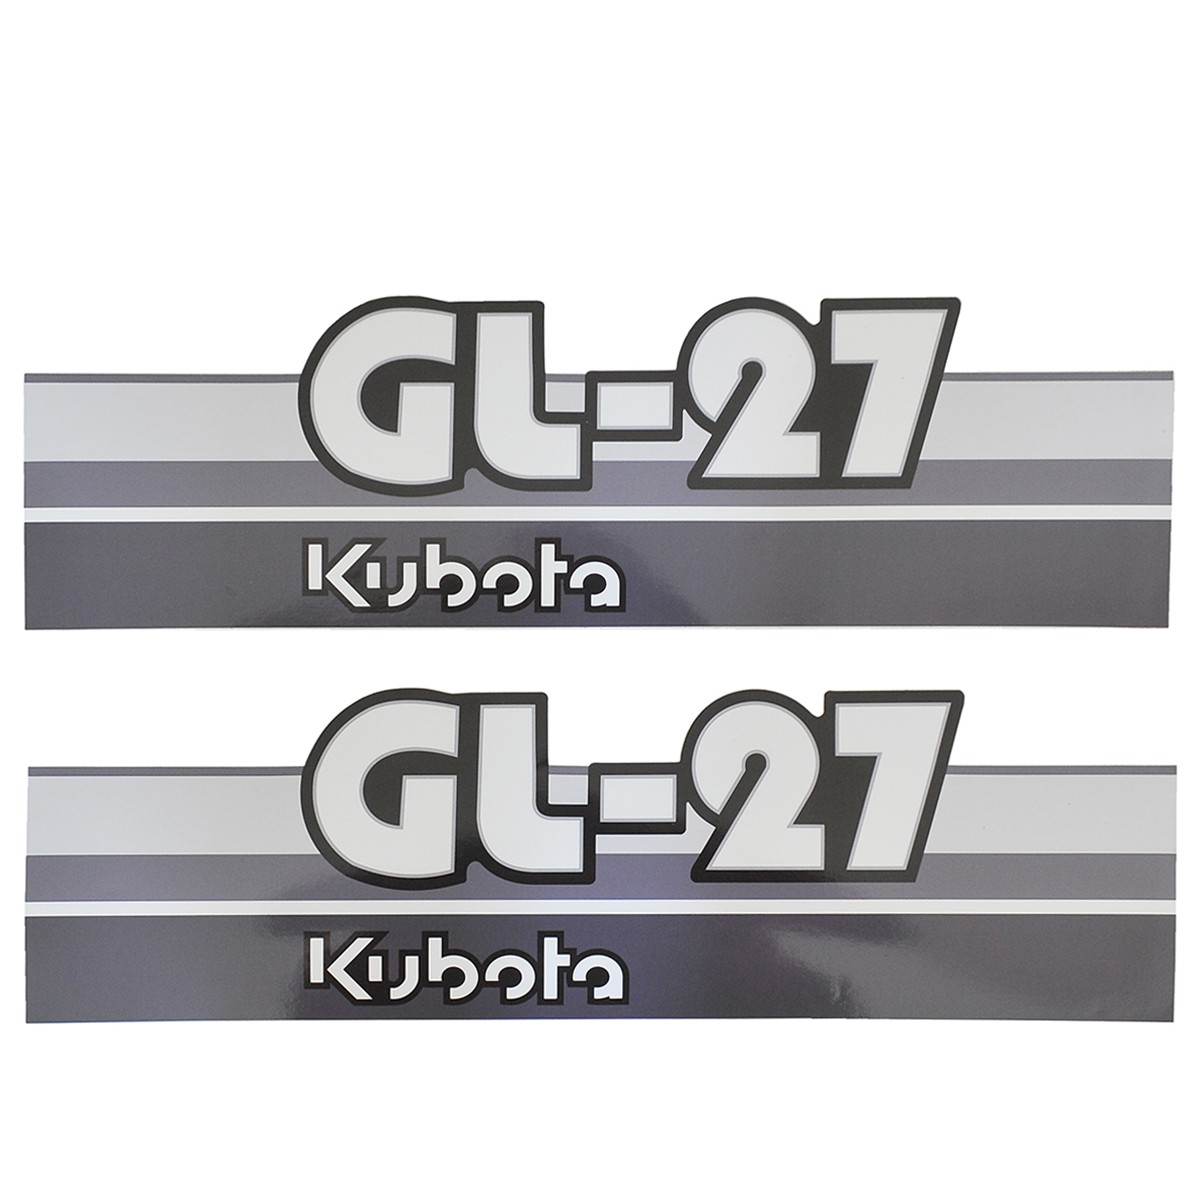 Kubota GL27 stickers